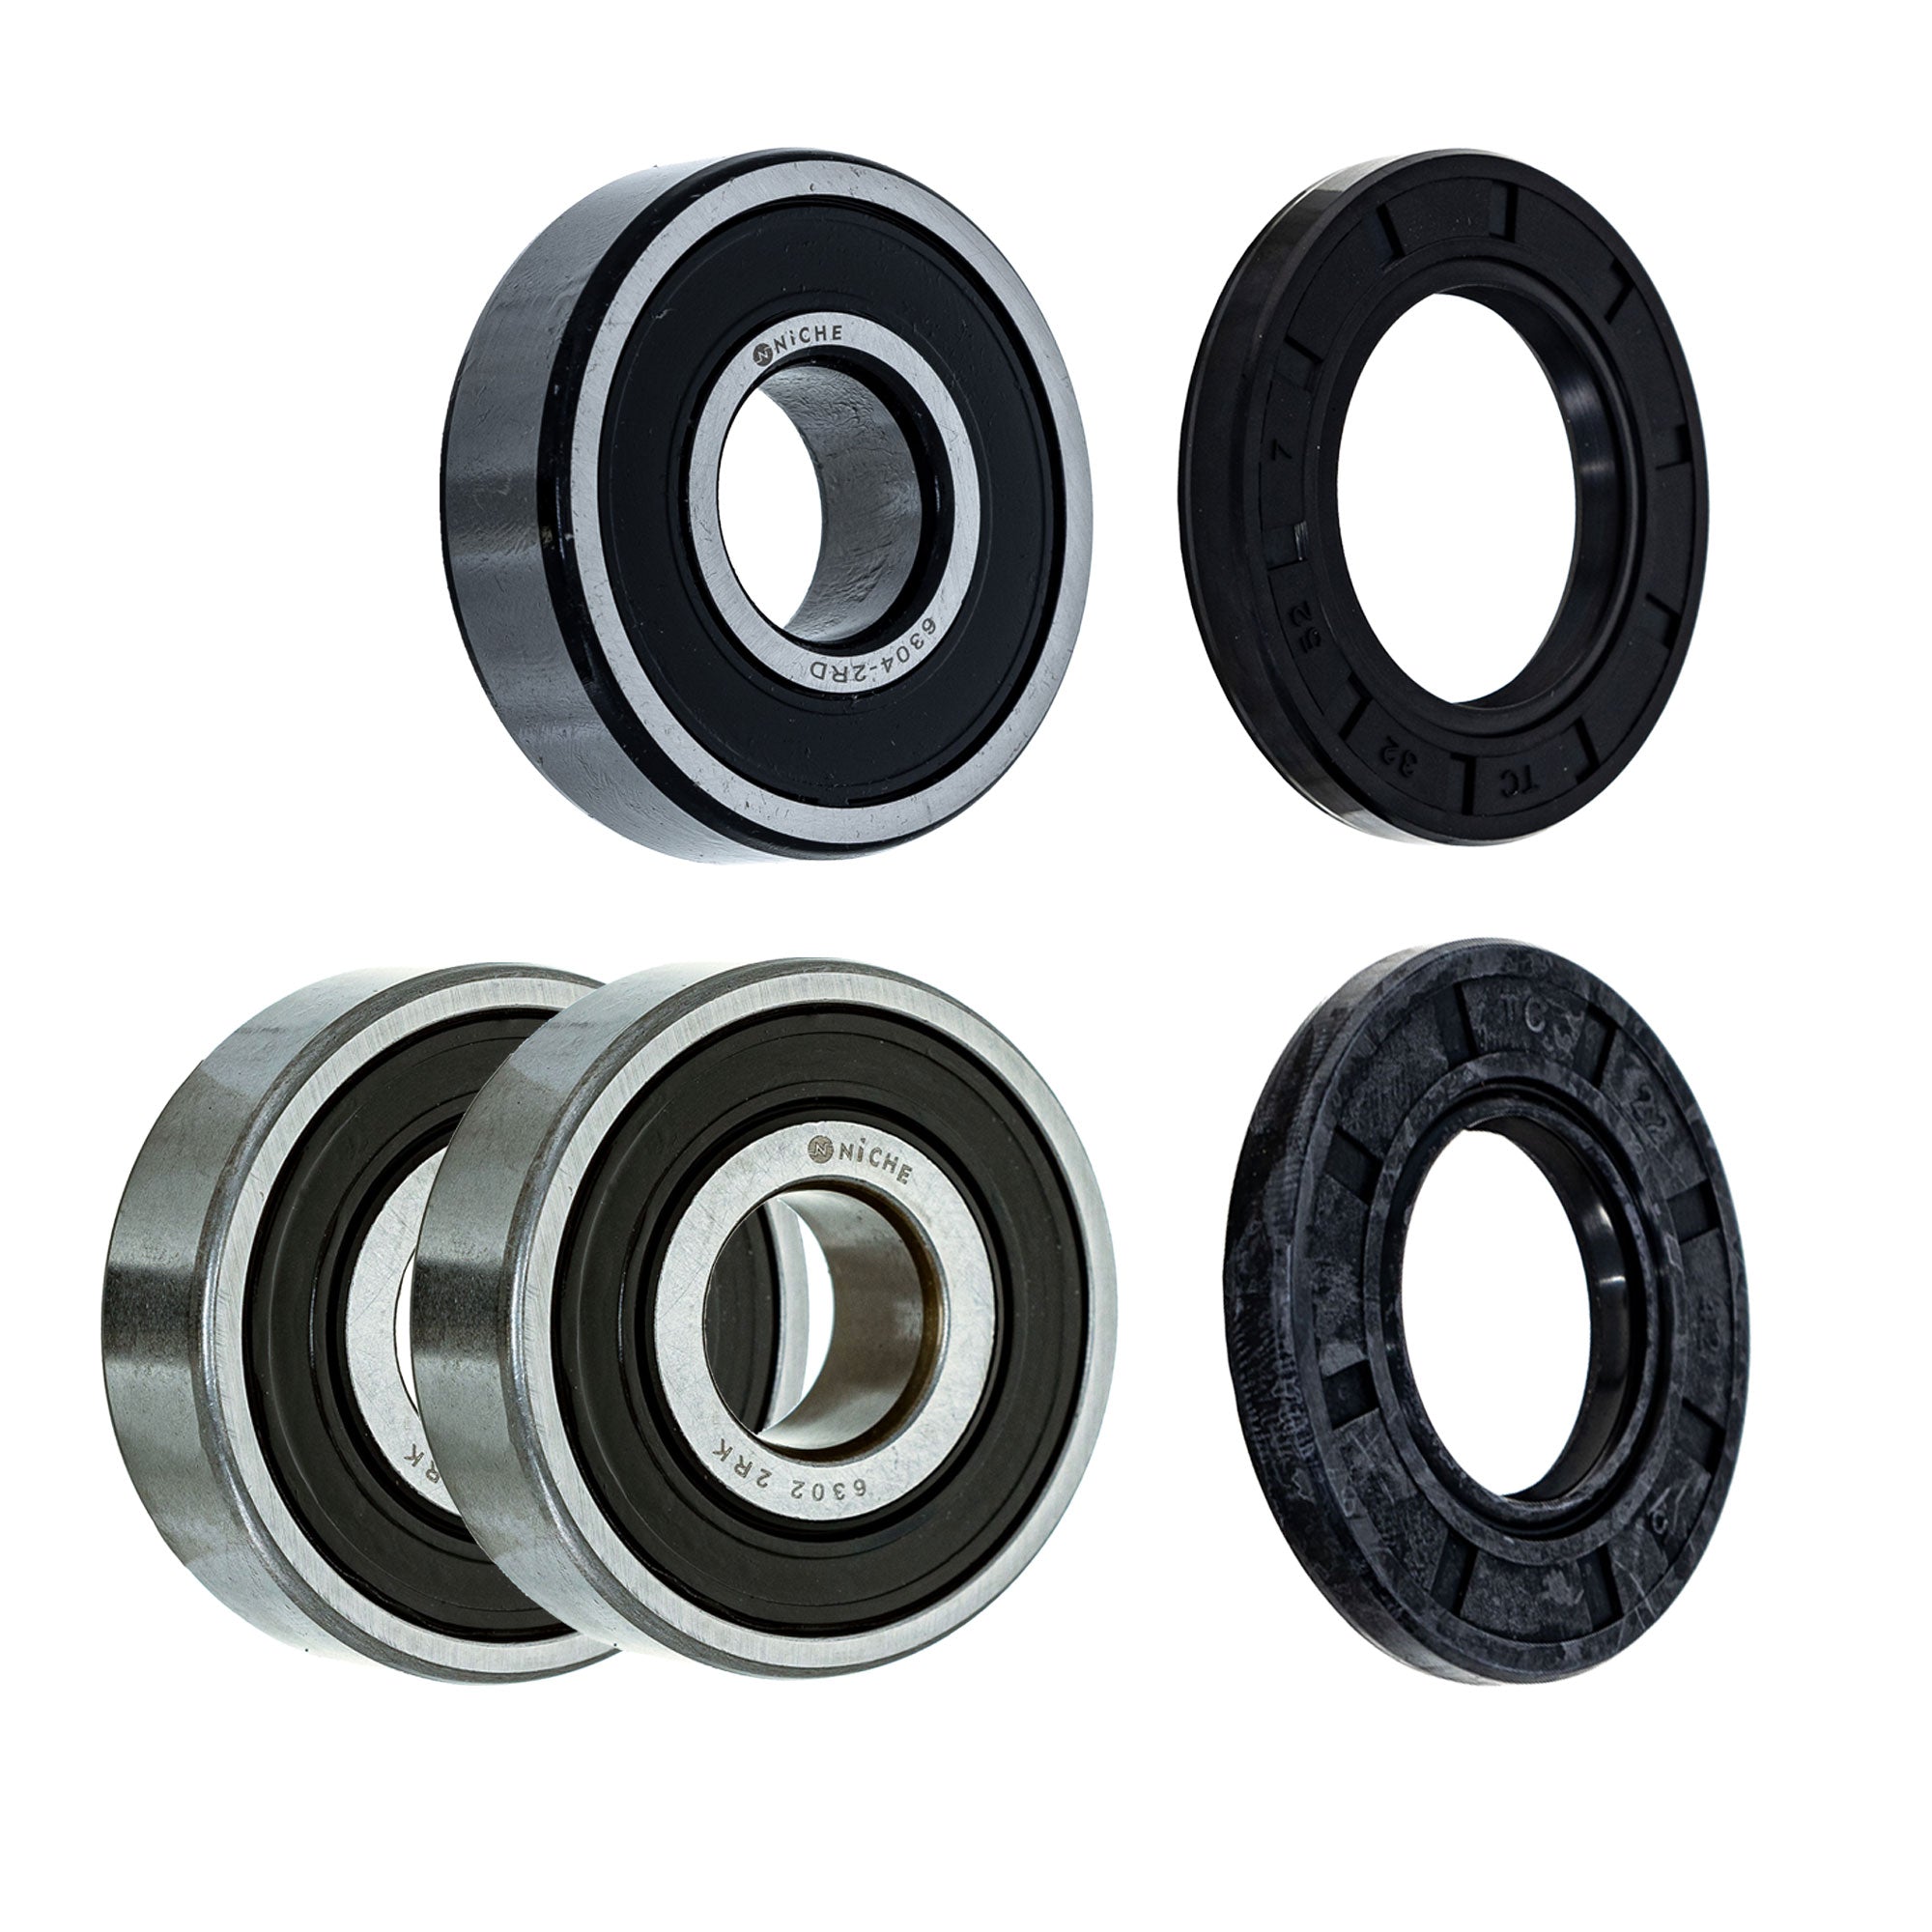 Wheel Bearing Seal Kit for zOTHER RZ350 NICHE MK1008902